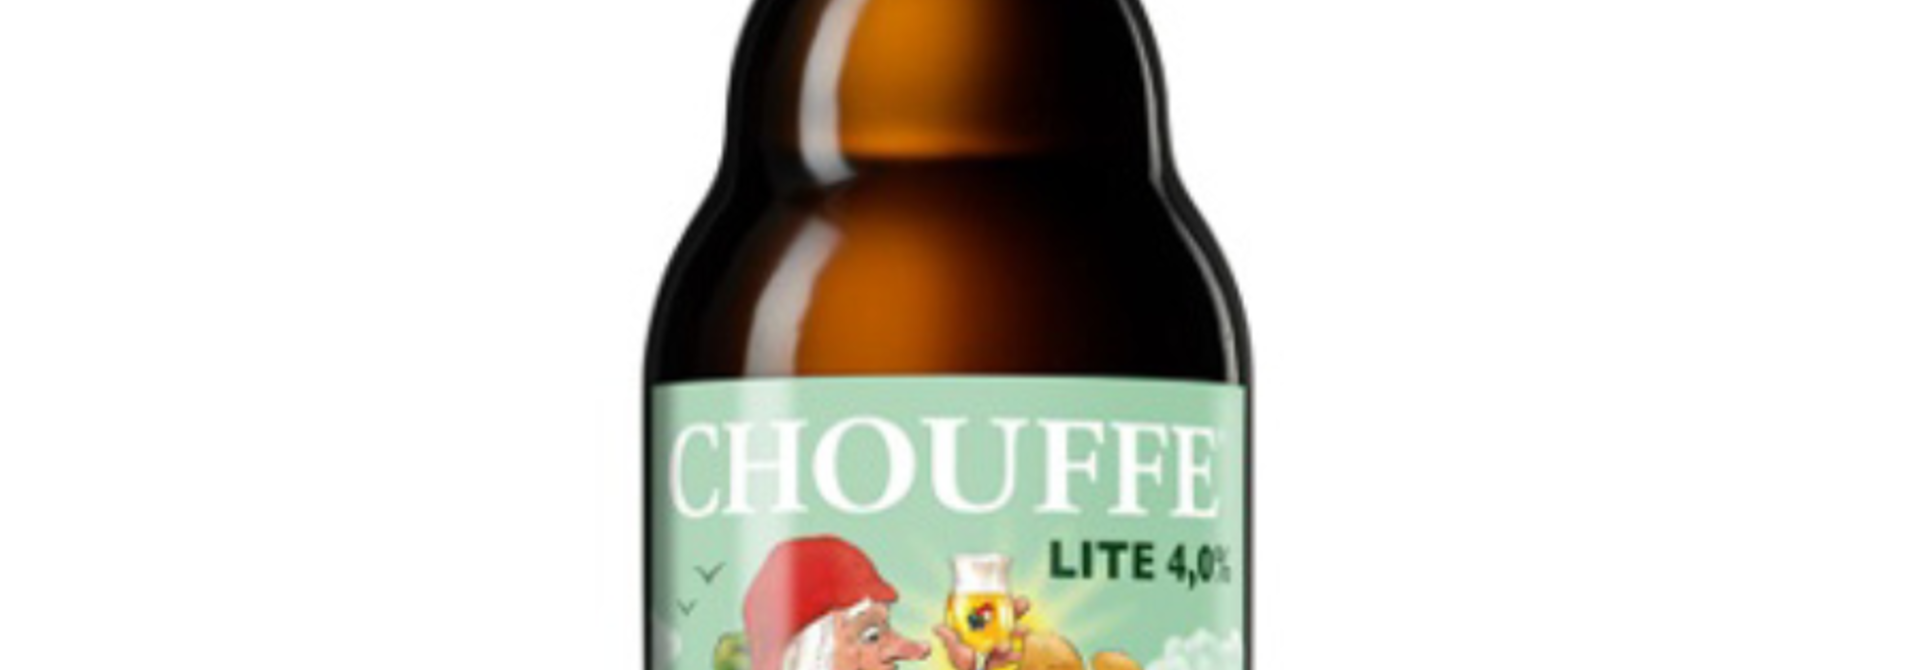 La Chouffe Lite 33CL 4%